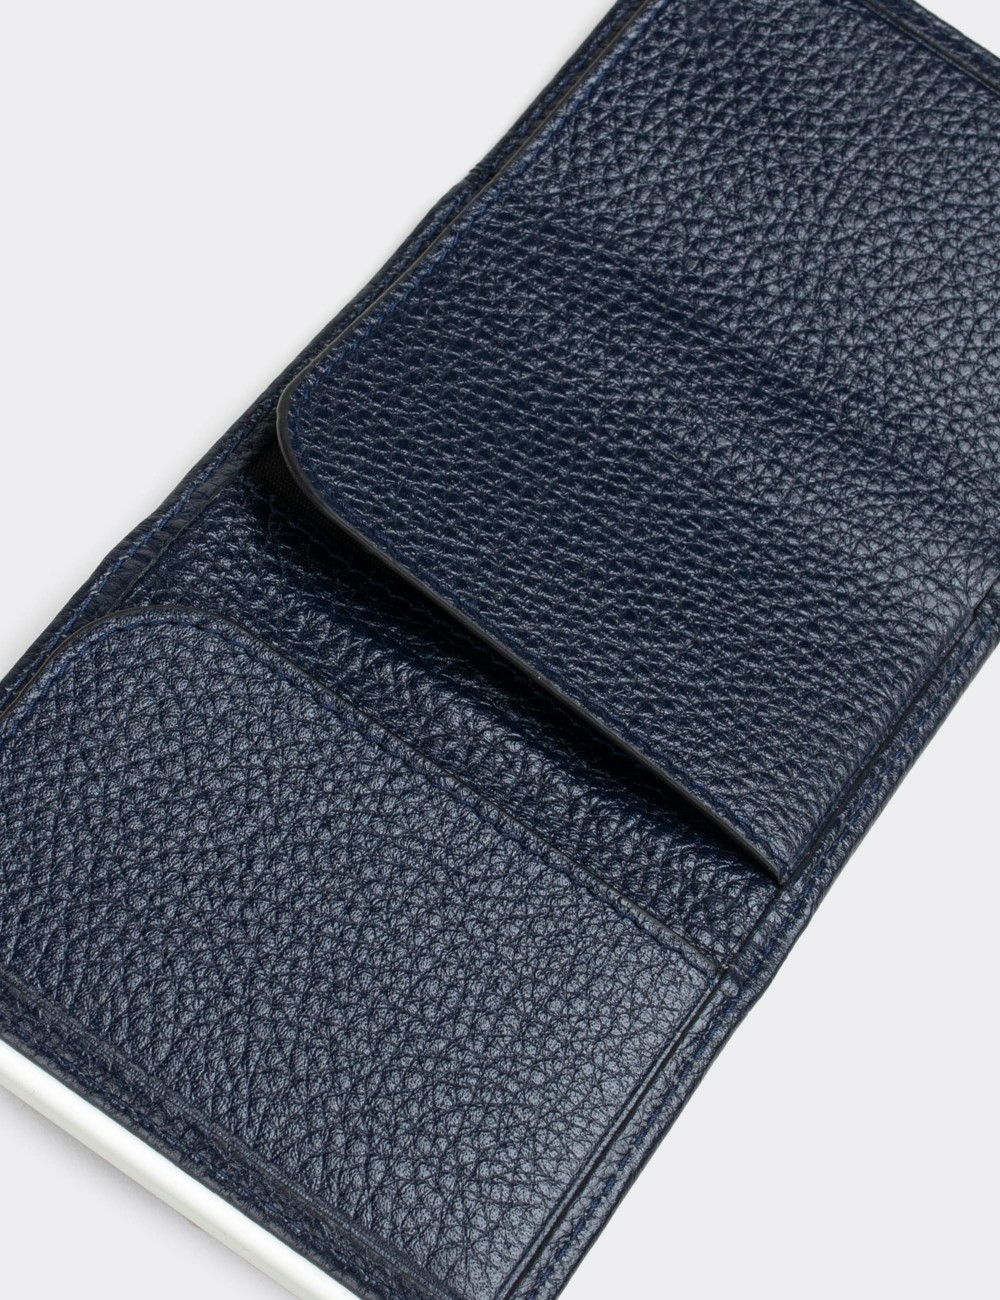  Leather Navy Men's Wallet - 00632MLCVZ01